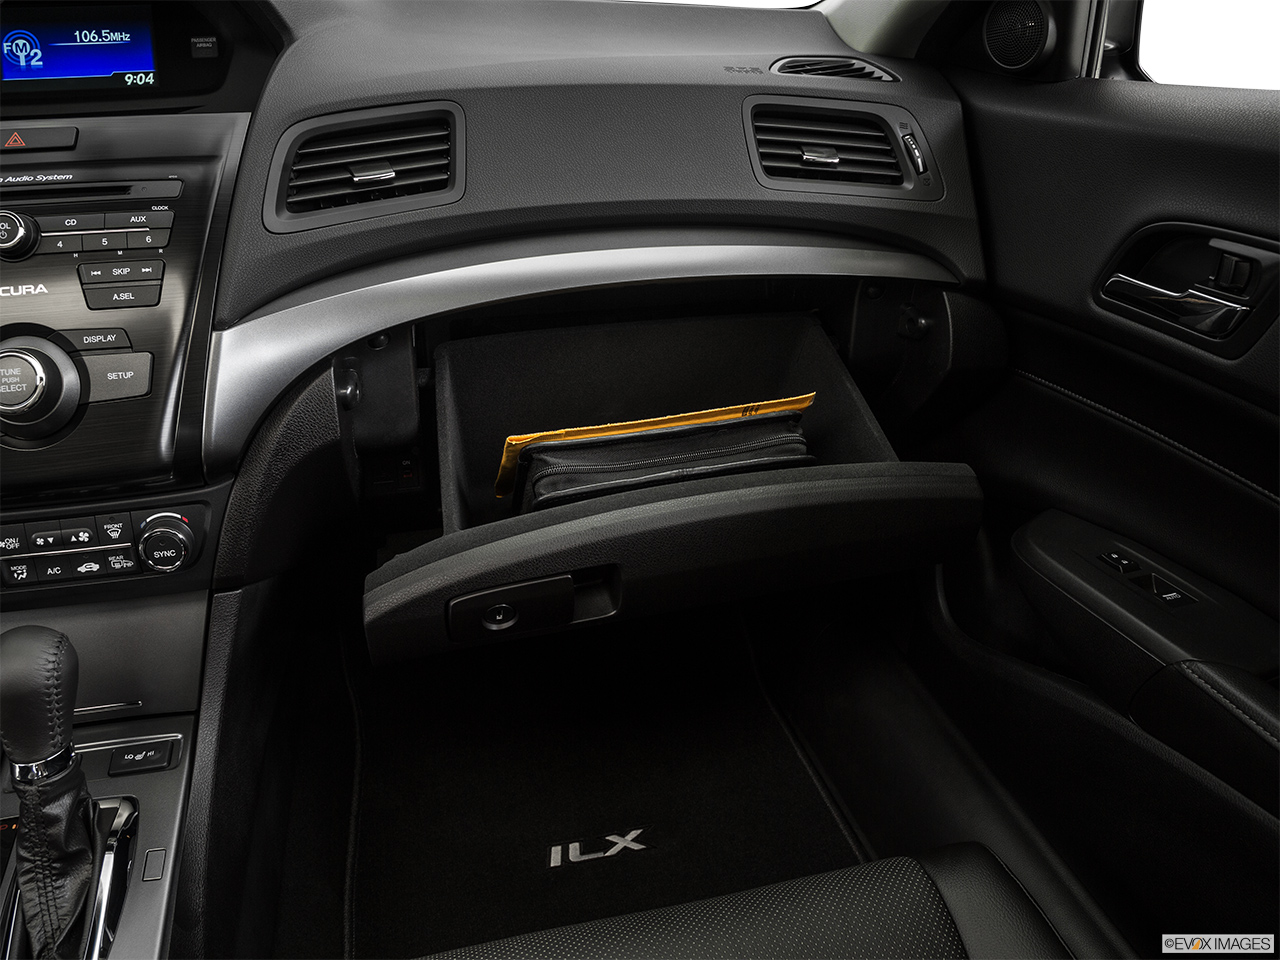 2015 Acura ILX 5-Speed Automatic Glove box open. 